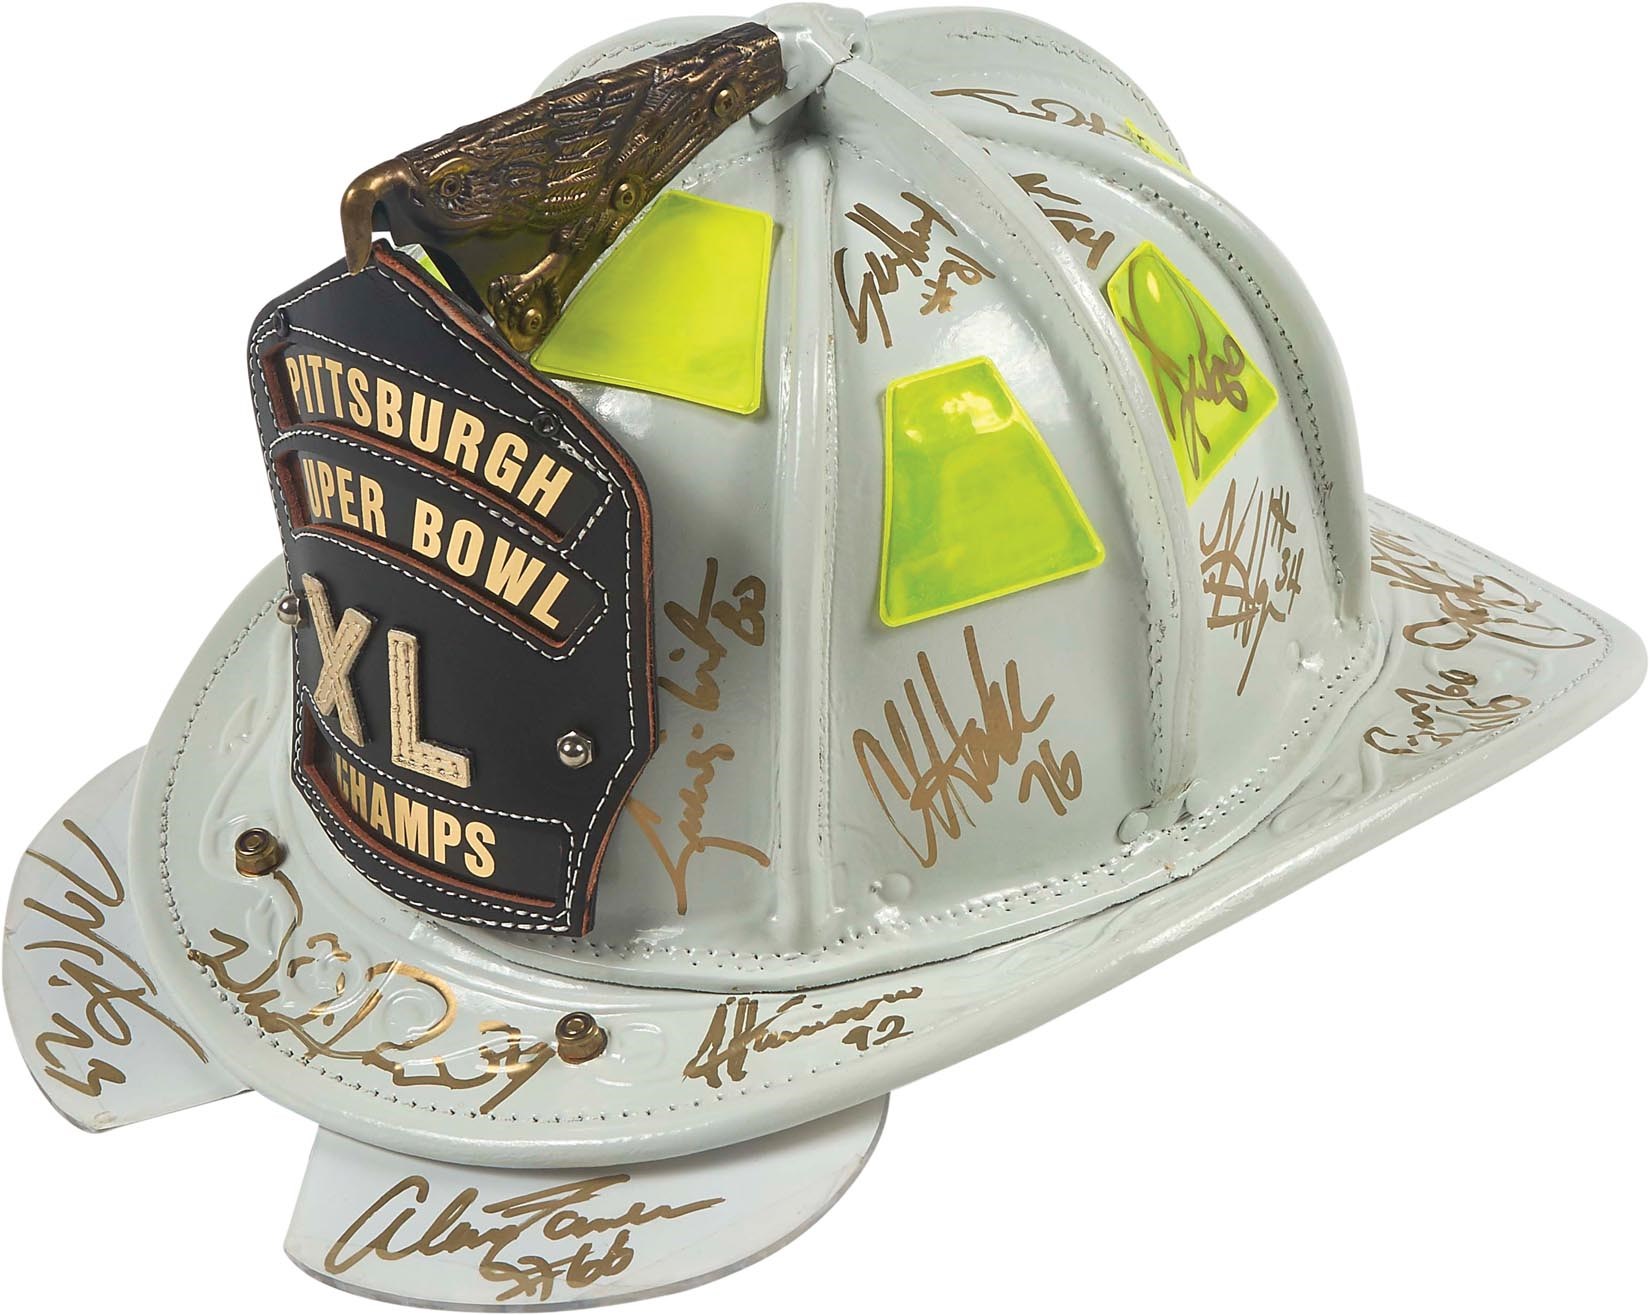 Football - Pittsburgh Steelers Super Bowl XL Champions Signed Custom Fireman's Helmet